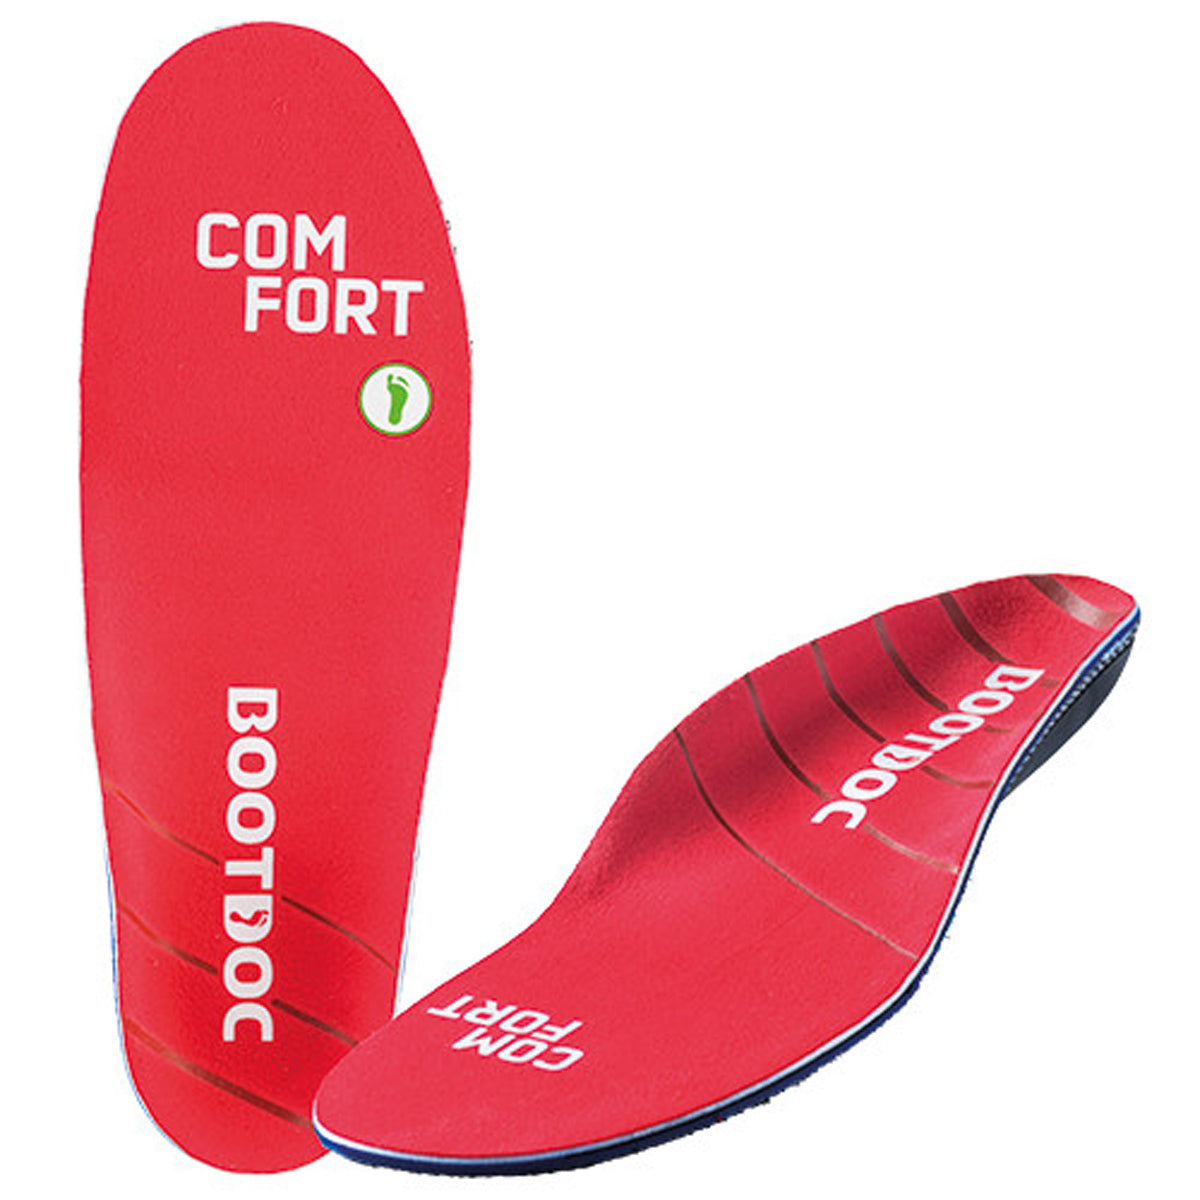 BootDoc Comfort Ski Boot Insoles